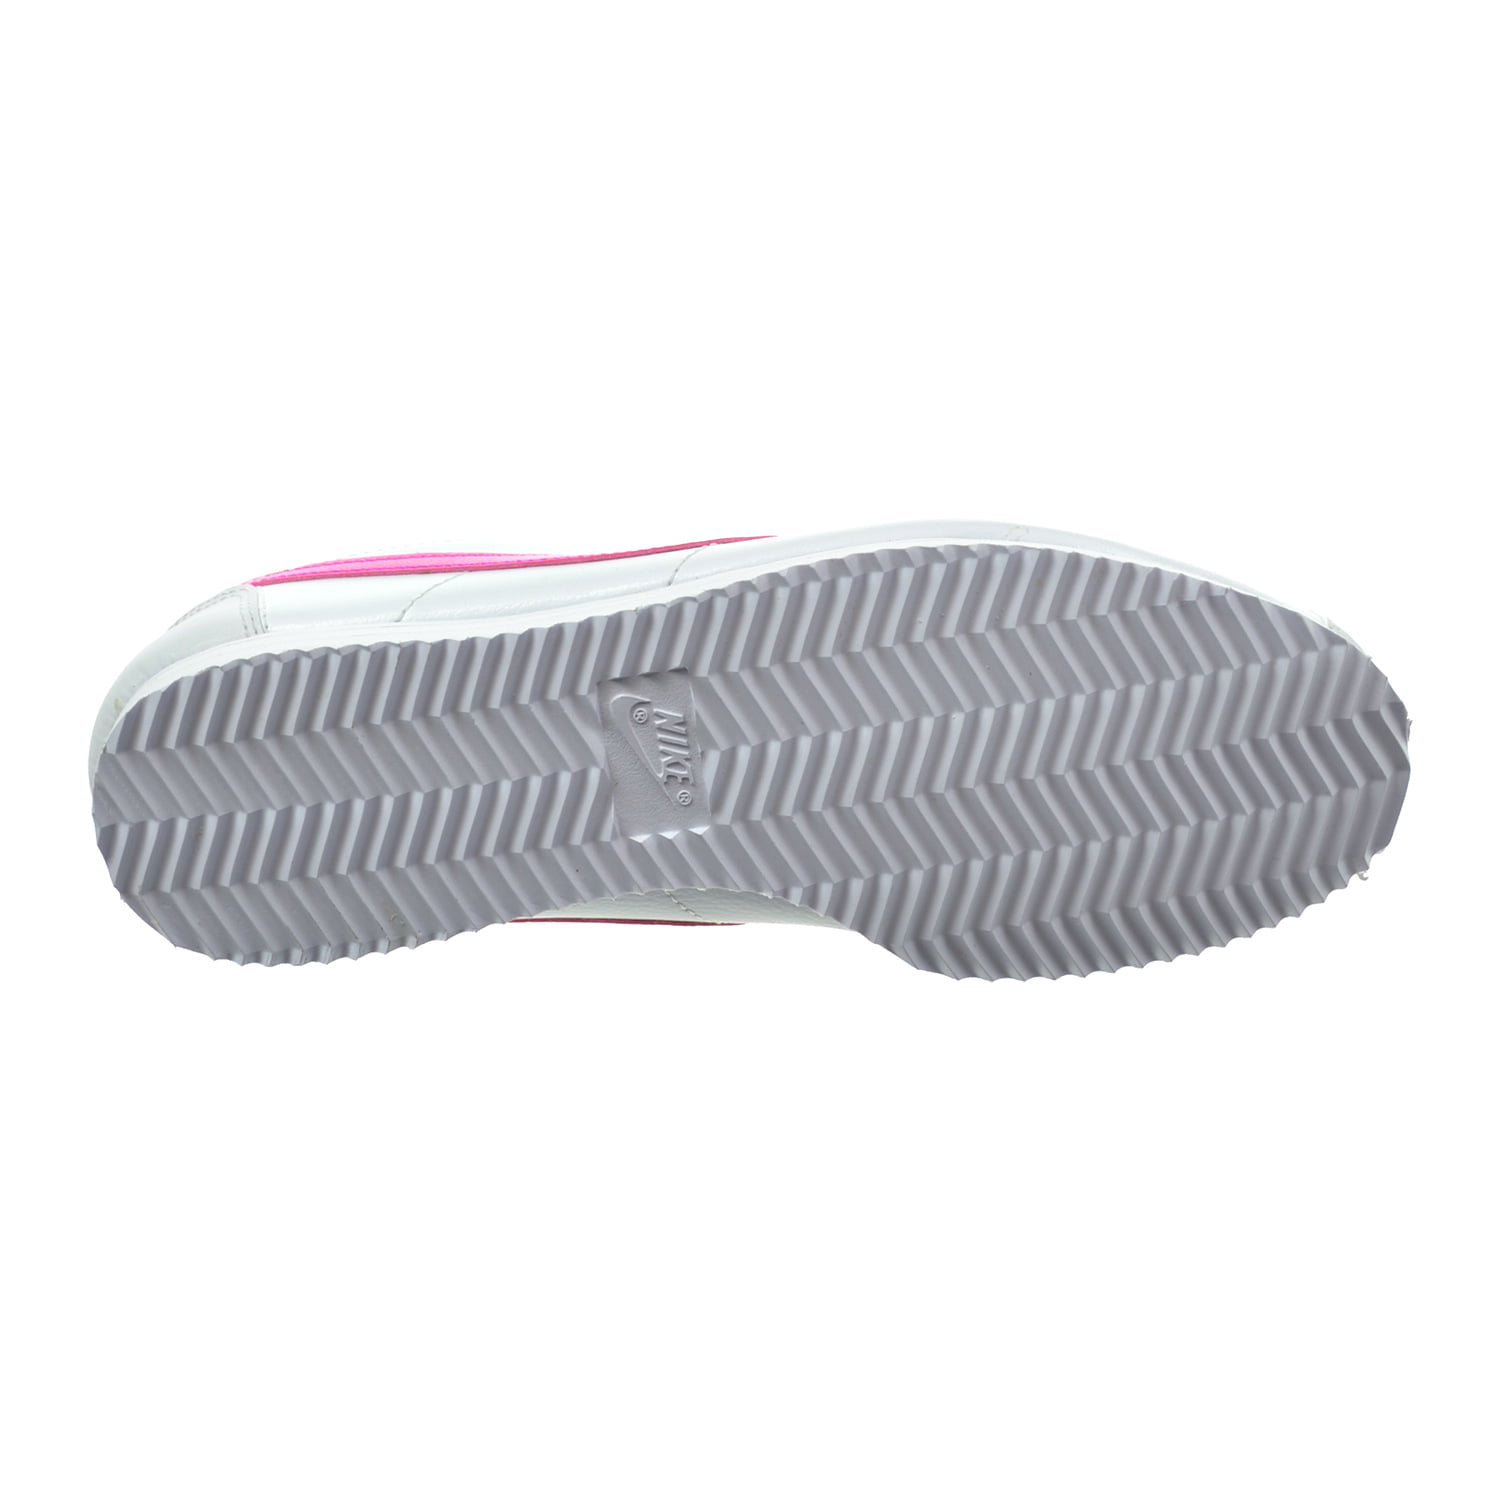 Nike Cortez (GS) Big Kid's Shoes White/Pink Blast 749502-106 (4.5